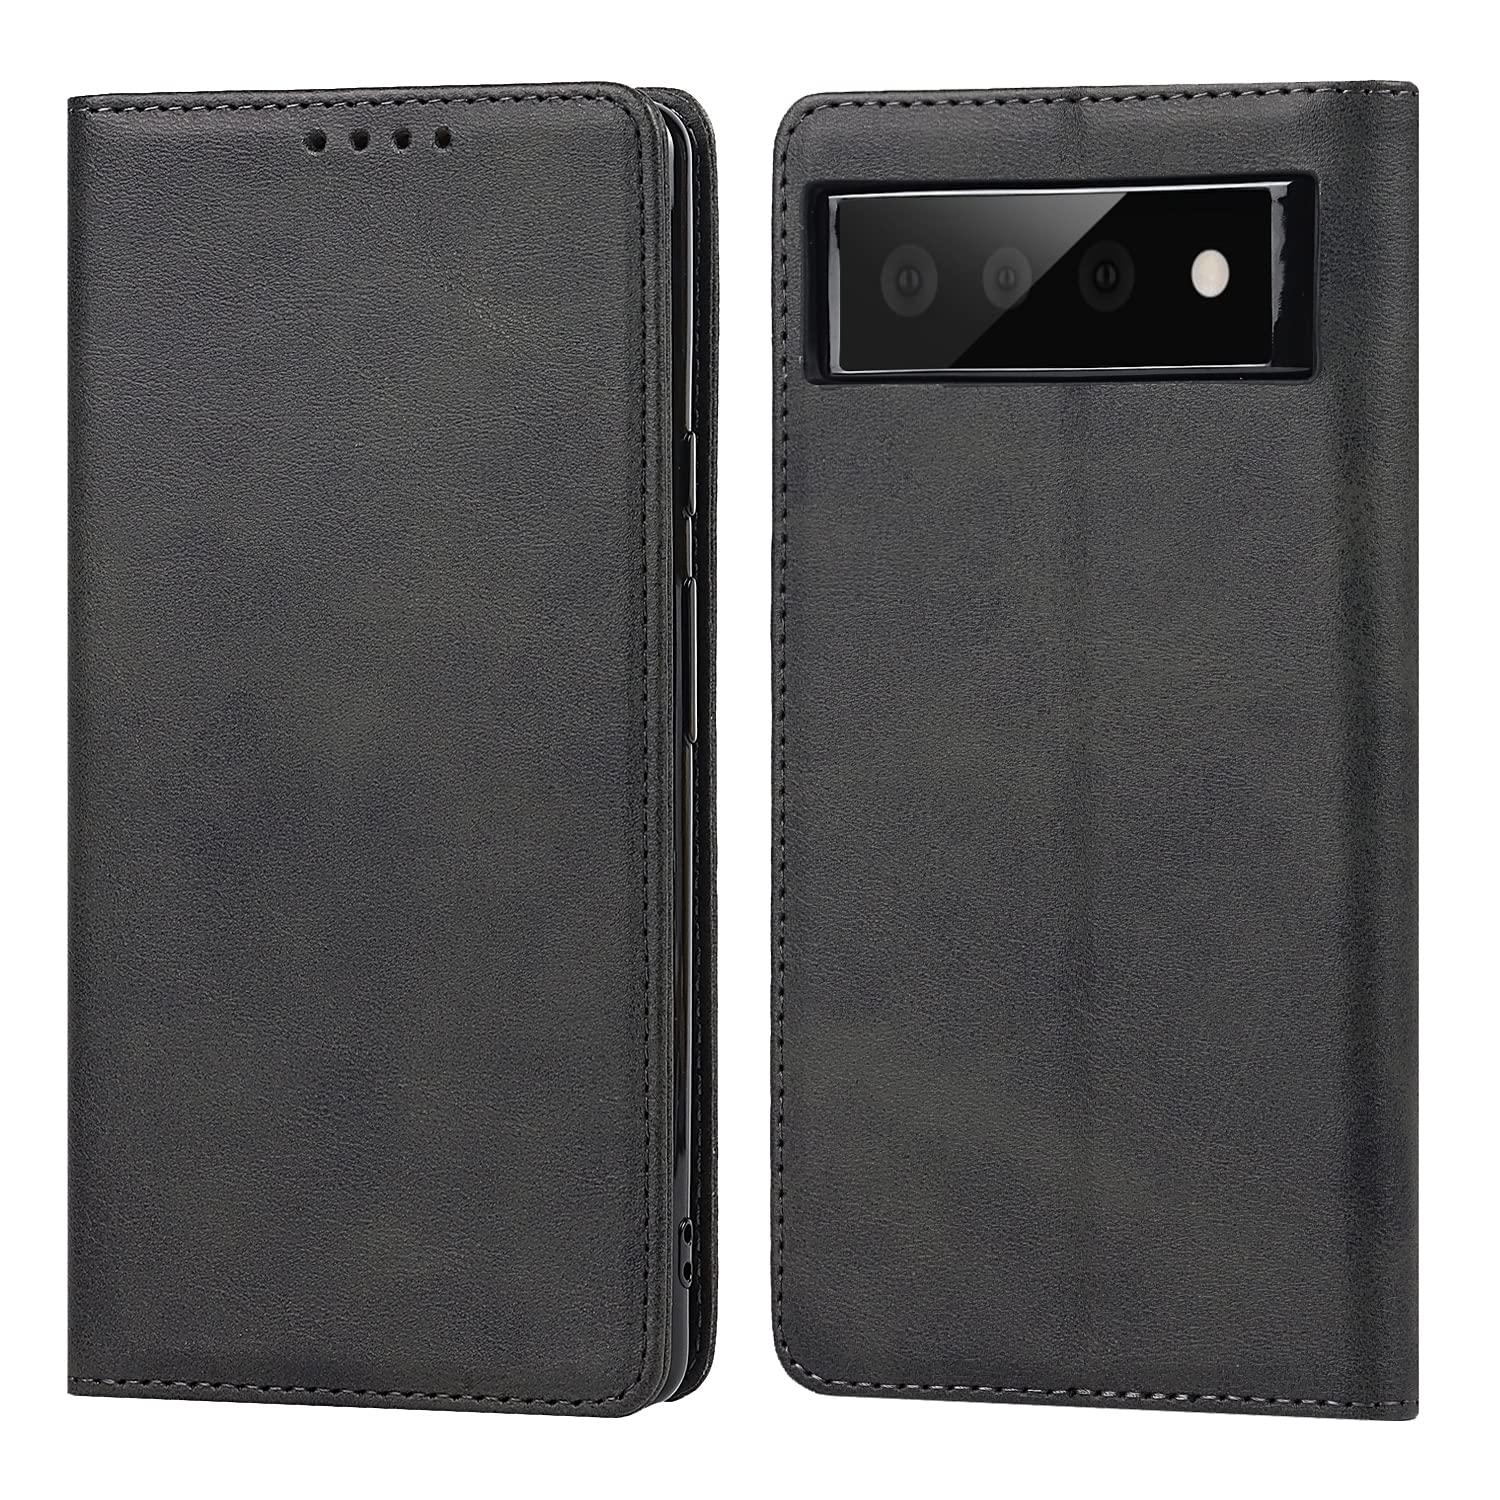 SailorTech Wallet case for Google Pixel 6, Premium PU Leather Case Folio Flip Cases Cover with Kickstand Function Card Slots Holder Dark Brown